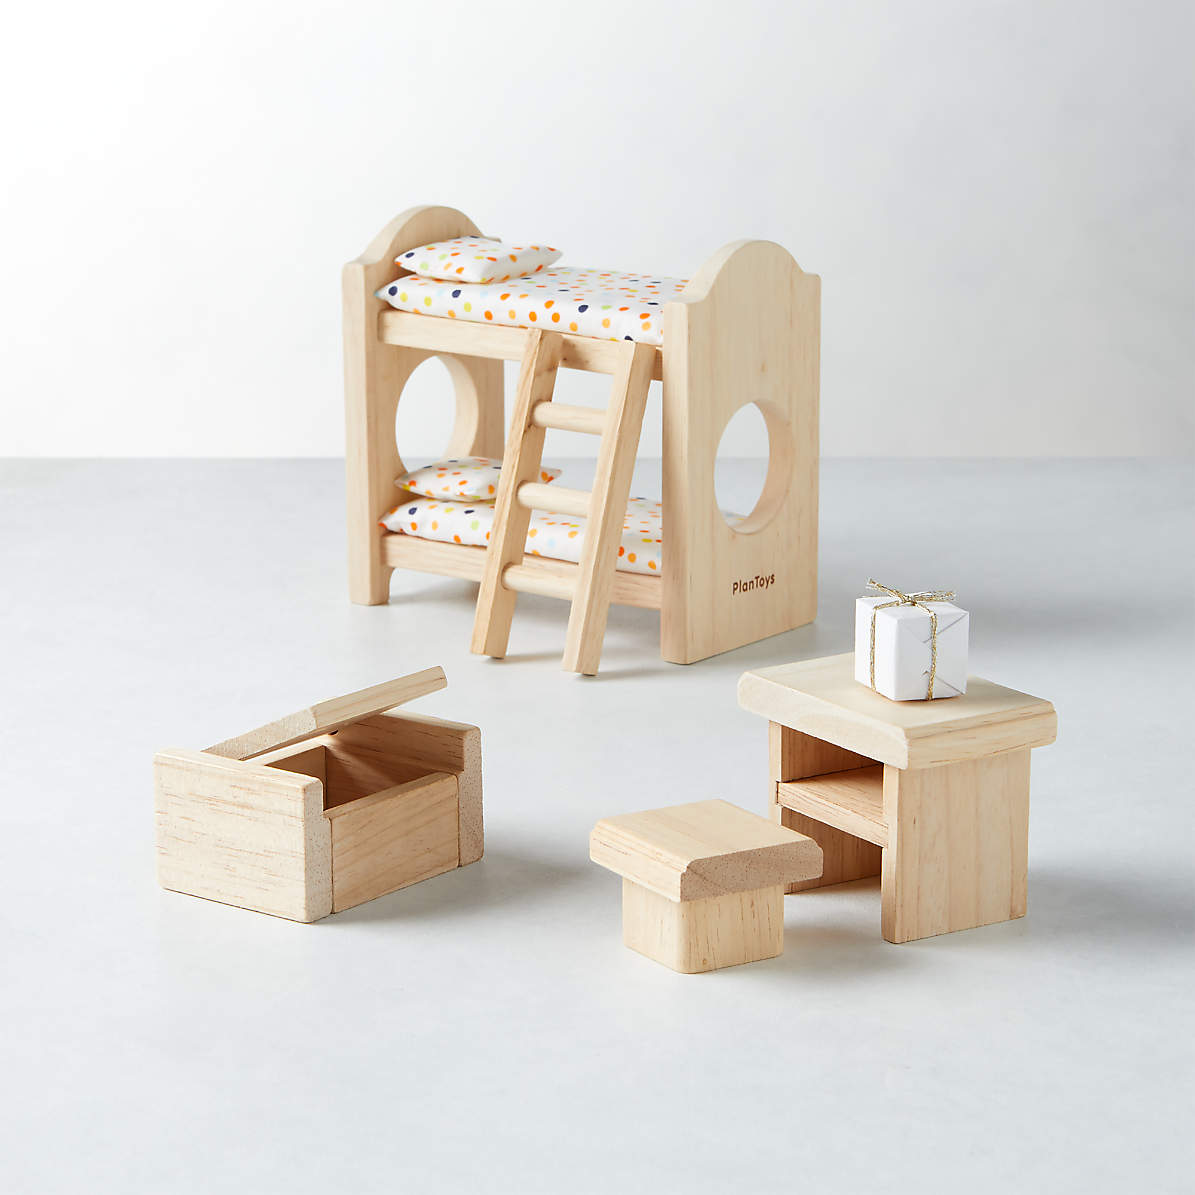 plantoys dollhouse furniture